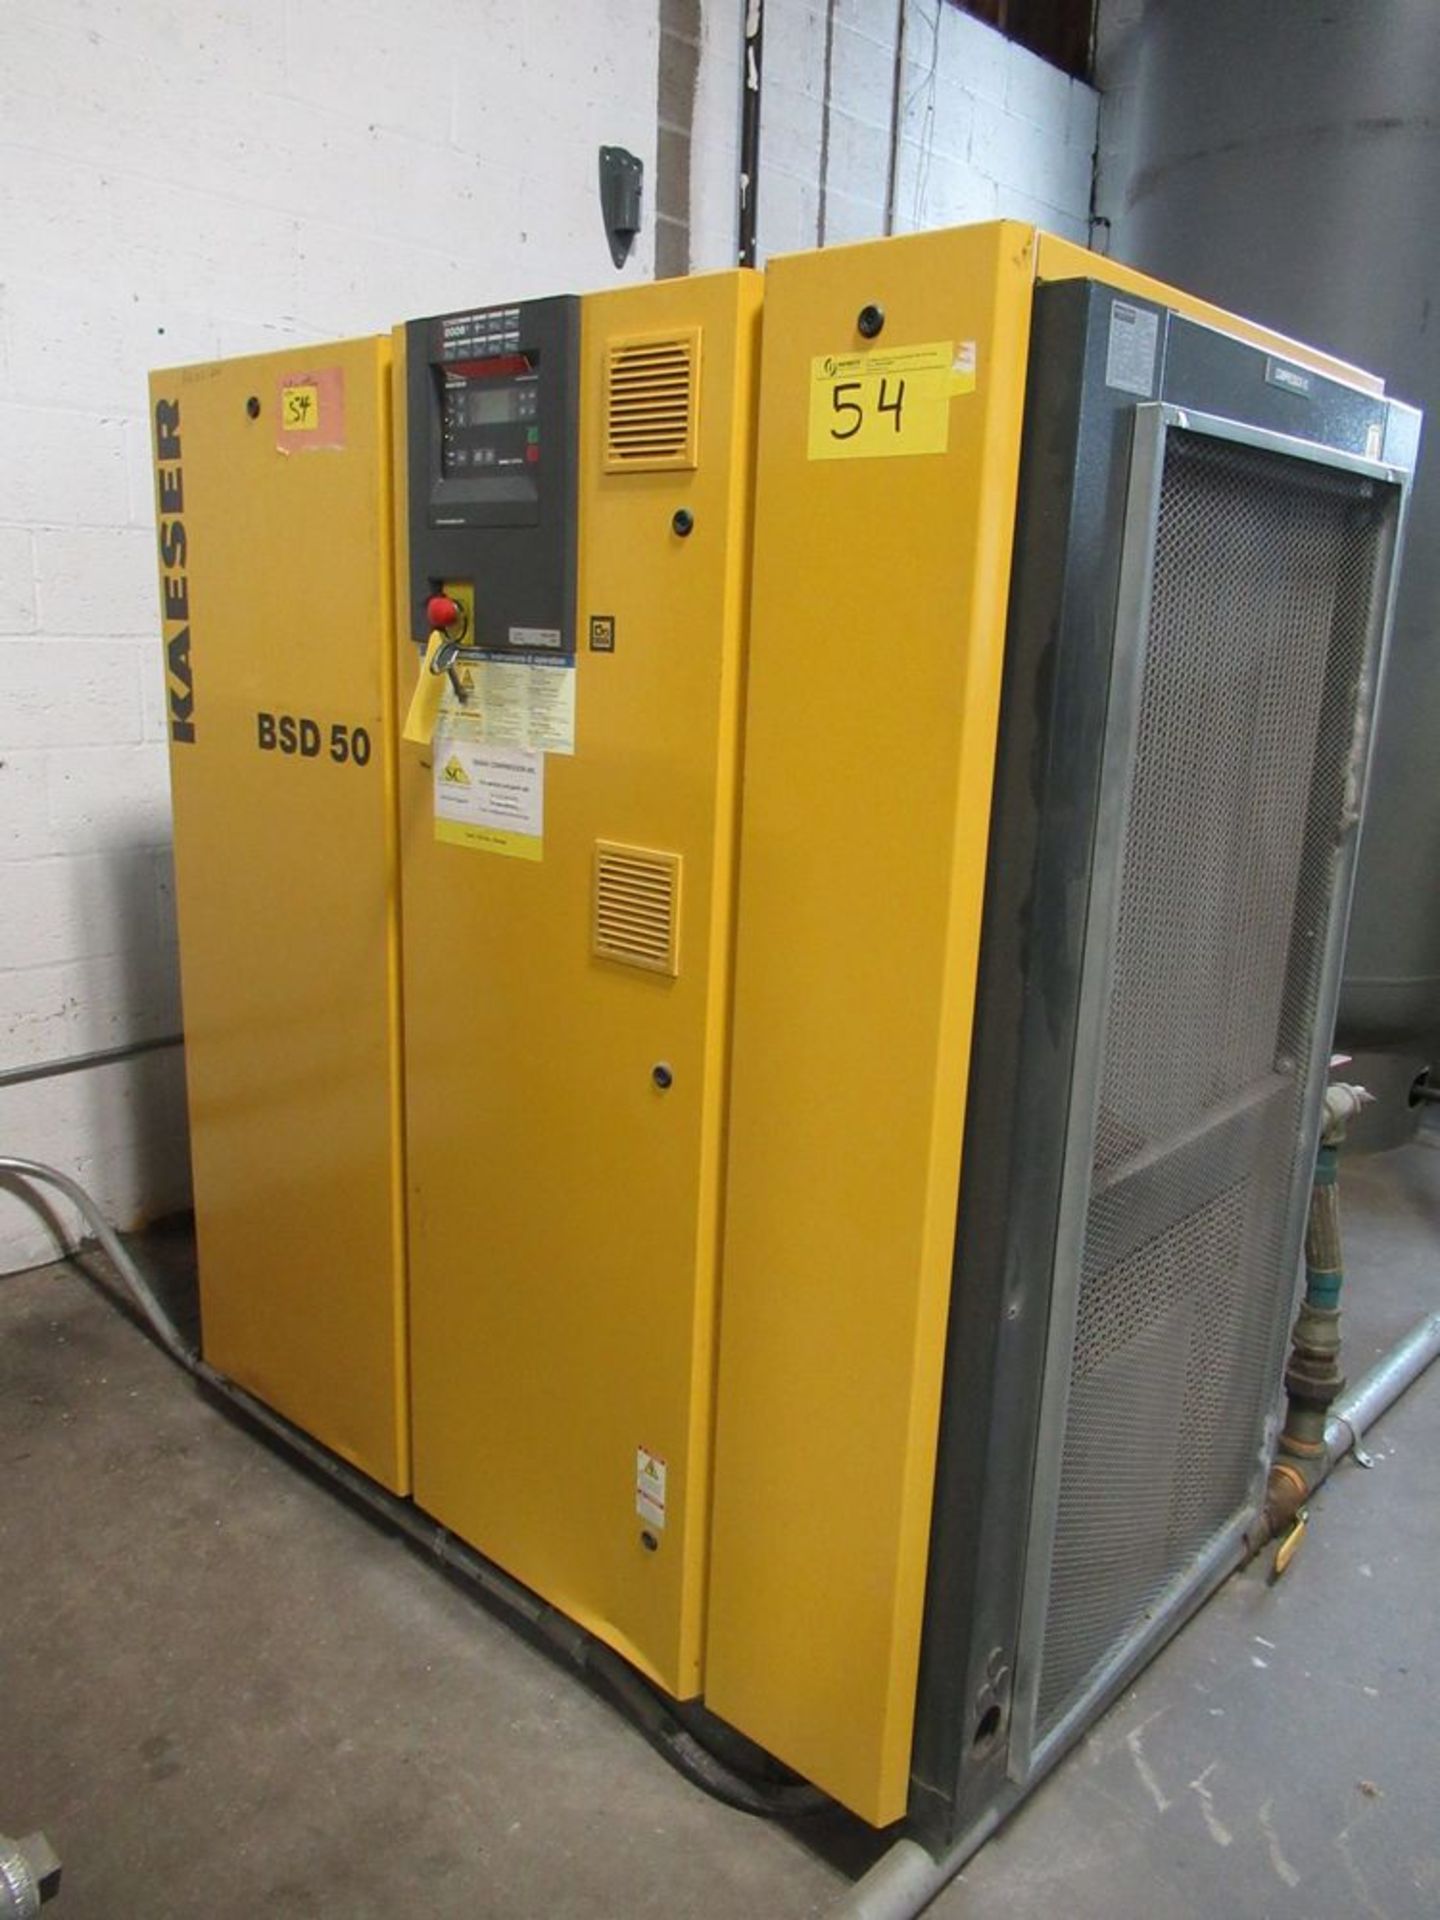 2006 KAESER BSD-50 50HP AIR COMPRESSOR W/ SIGMA CONTROL, S/N 1030 - Image 2 of 4